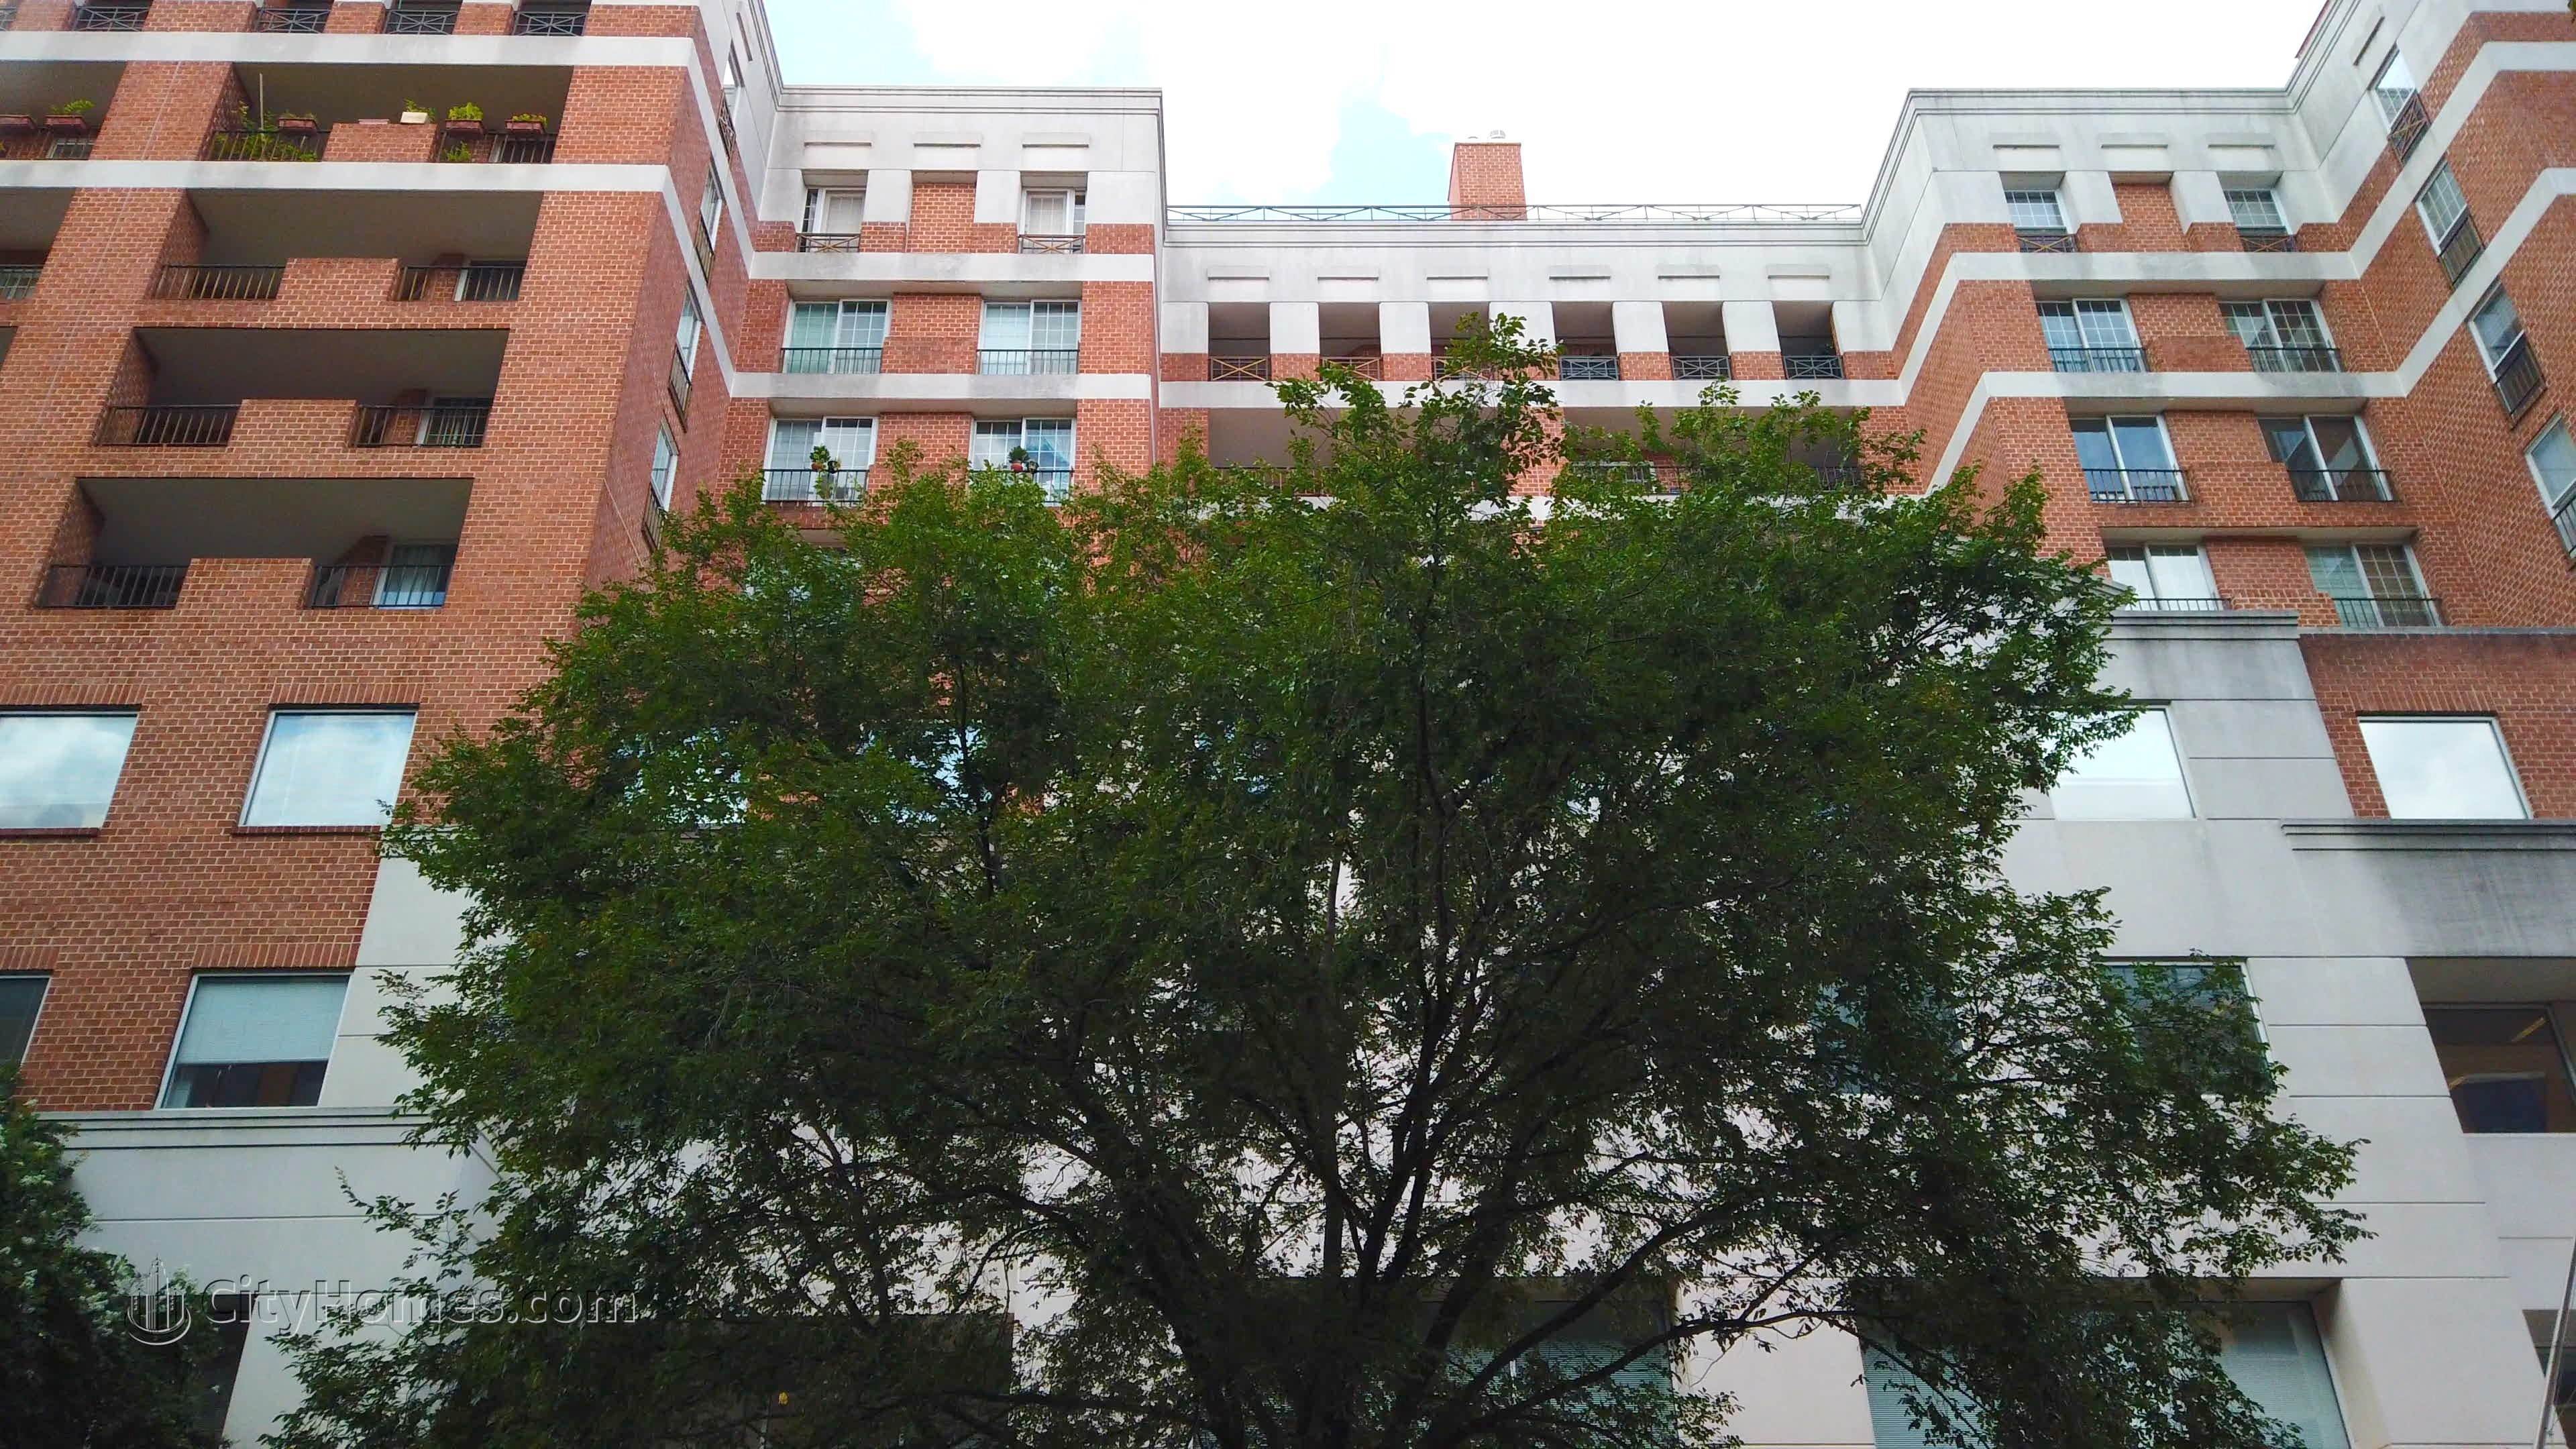 6. Metropolitan Condos building at 1230 23rd St NW, West End, Washington, DC 20037